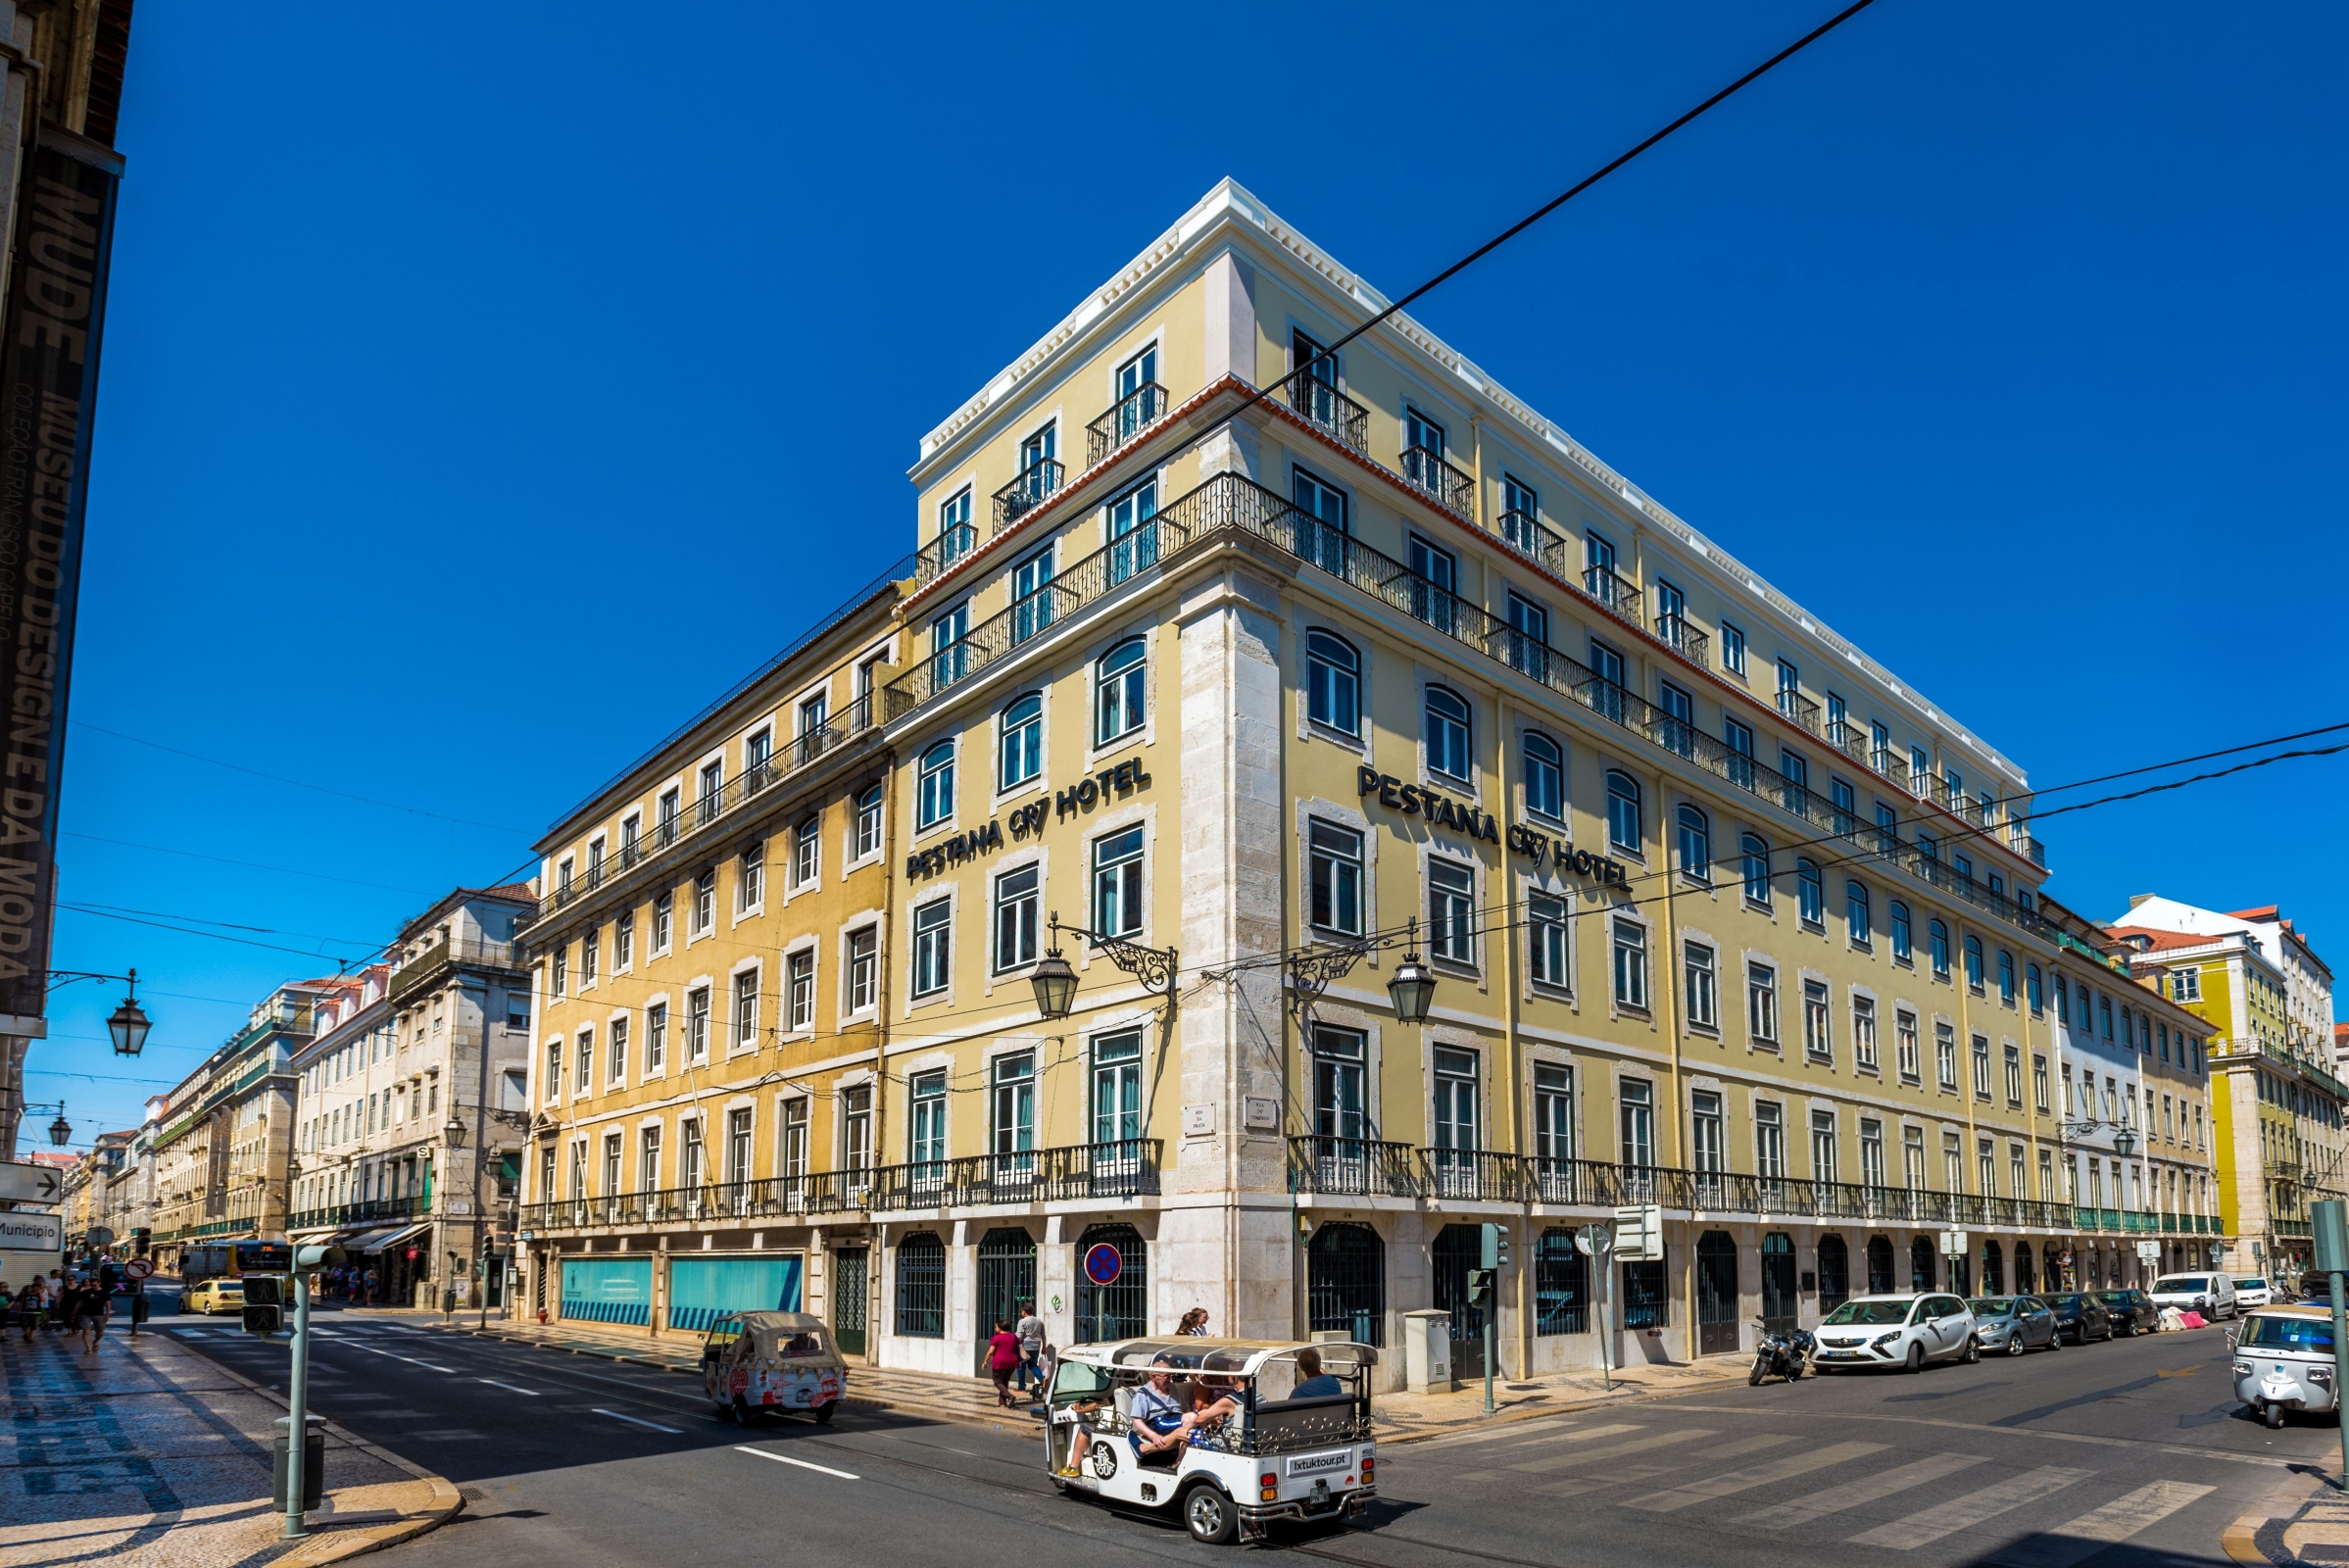 Hotel Pestana CR7 LisƄoa - LisƄon - Great prices at HOTEL INFO